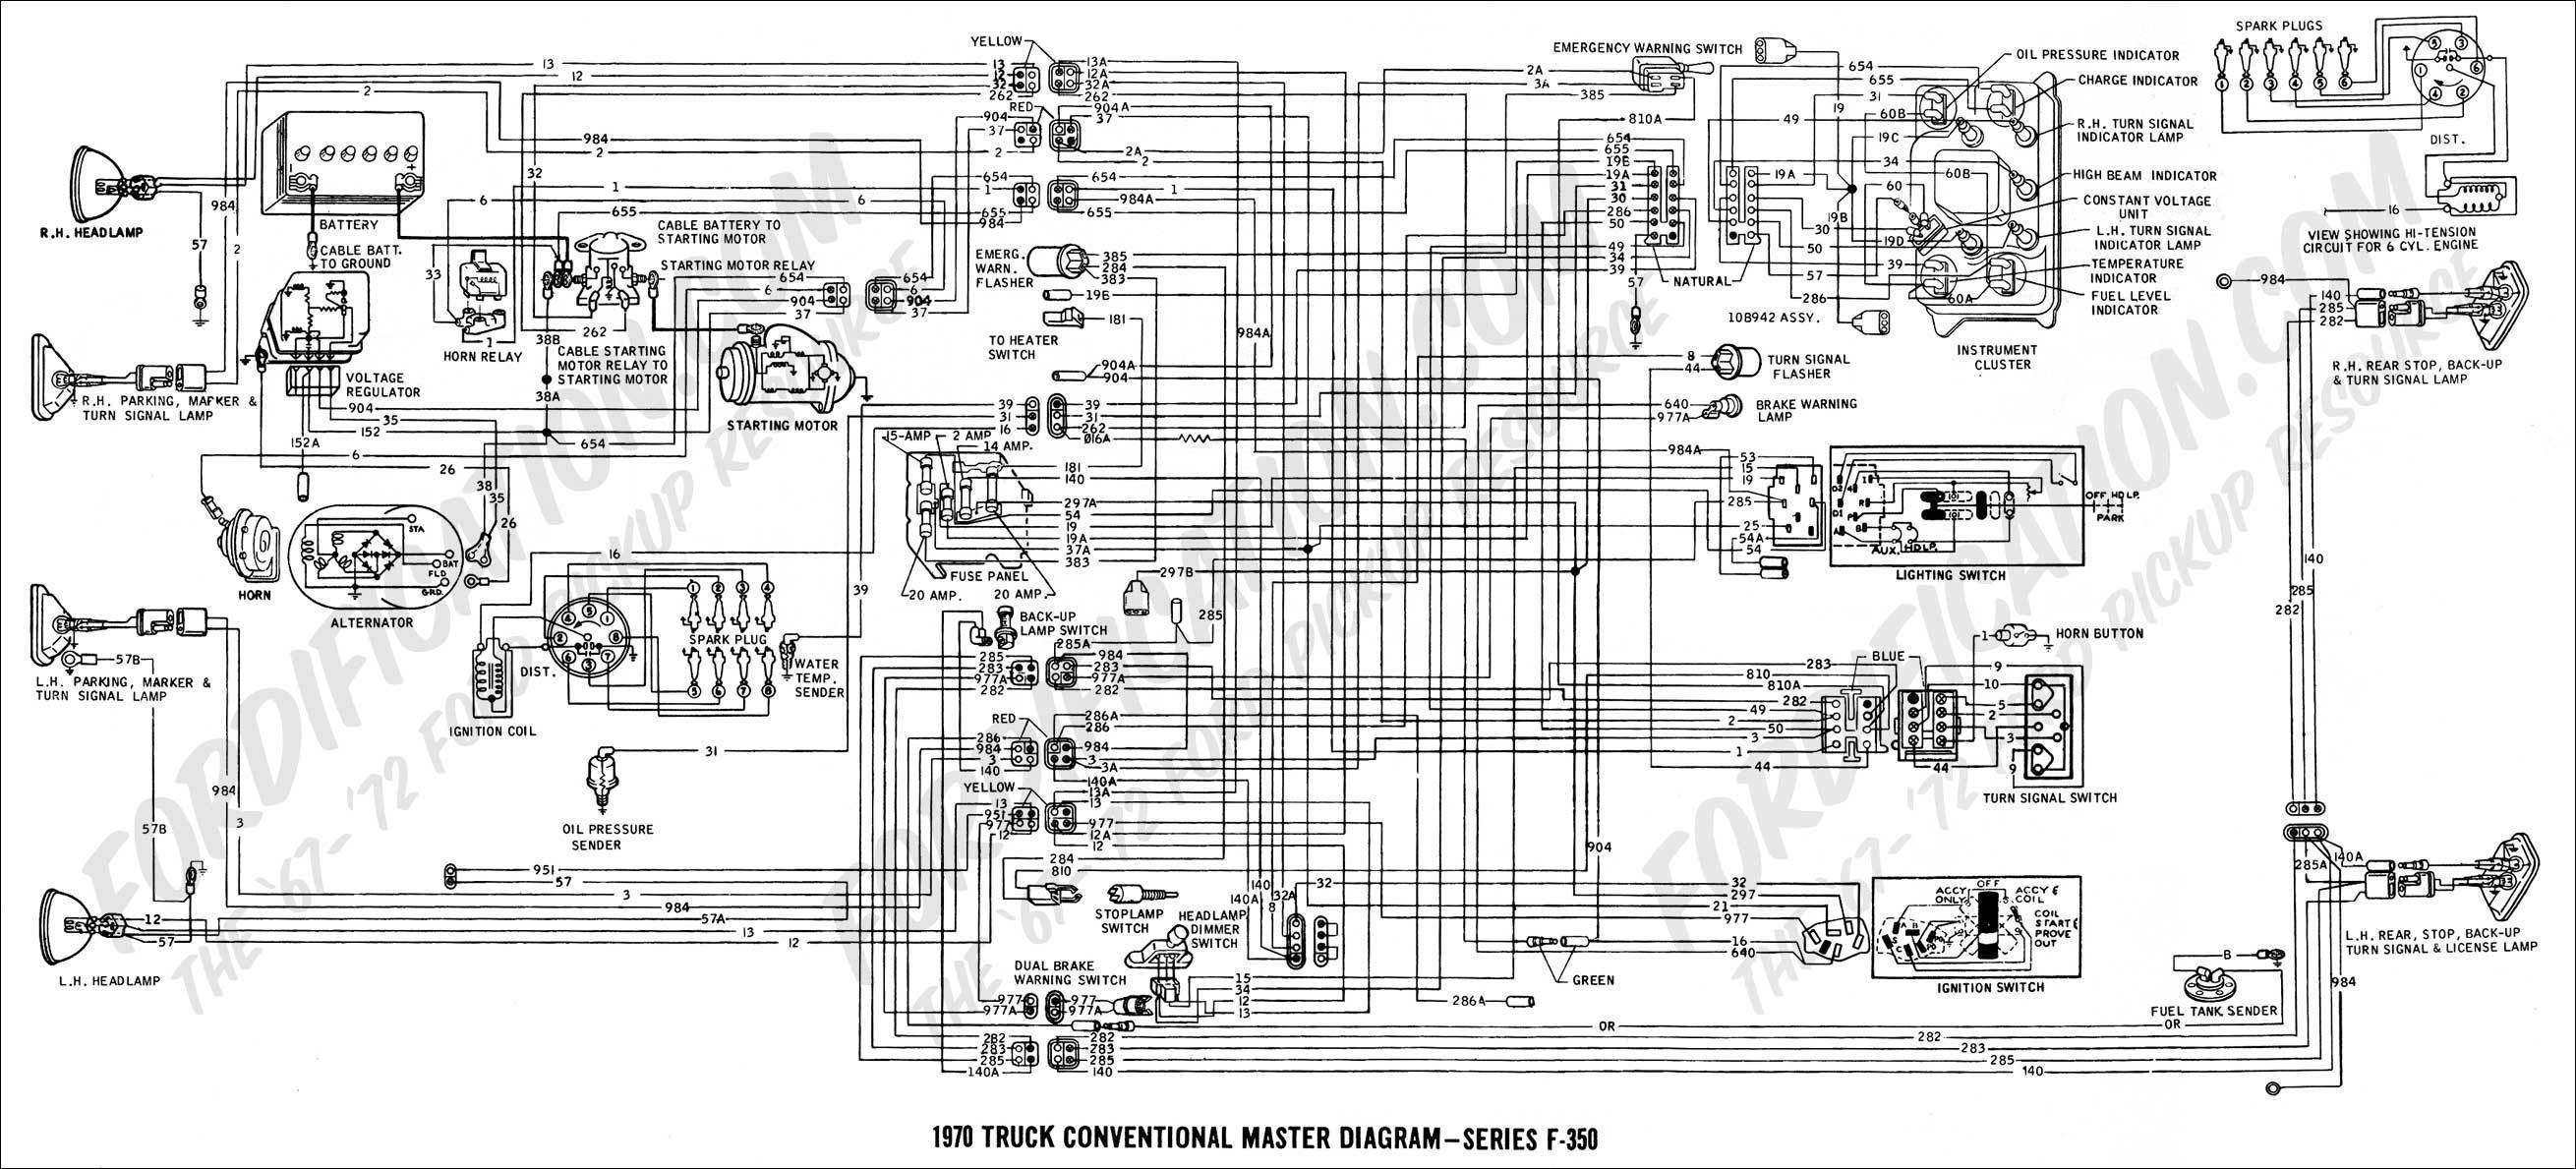 7 3 Powerstroke Wiring Diagram New 2000 7 3 Glow Plug Relay Wiring Diagram Save 2000 Ford F350 Diesel